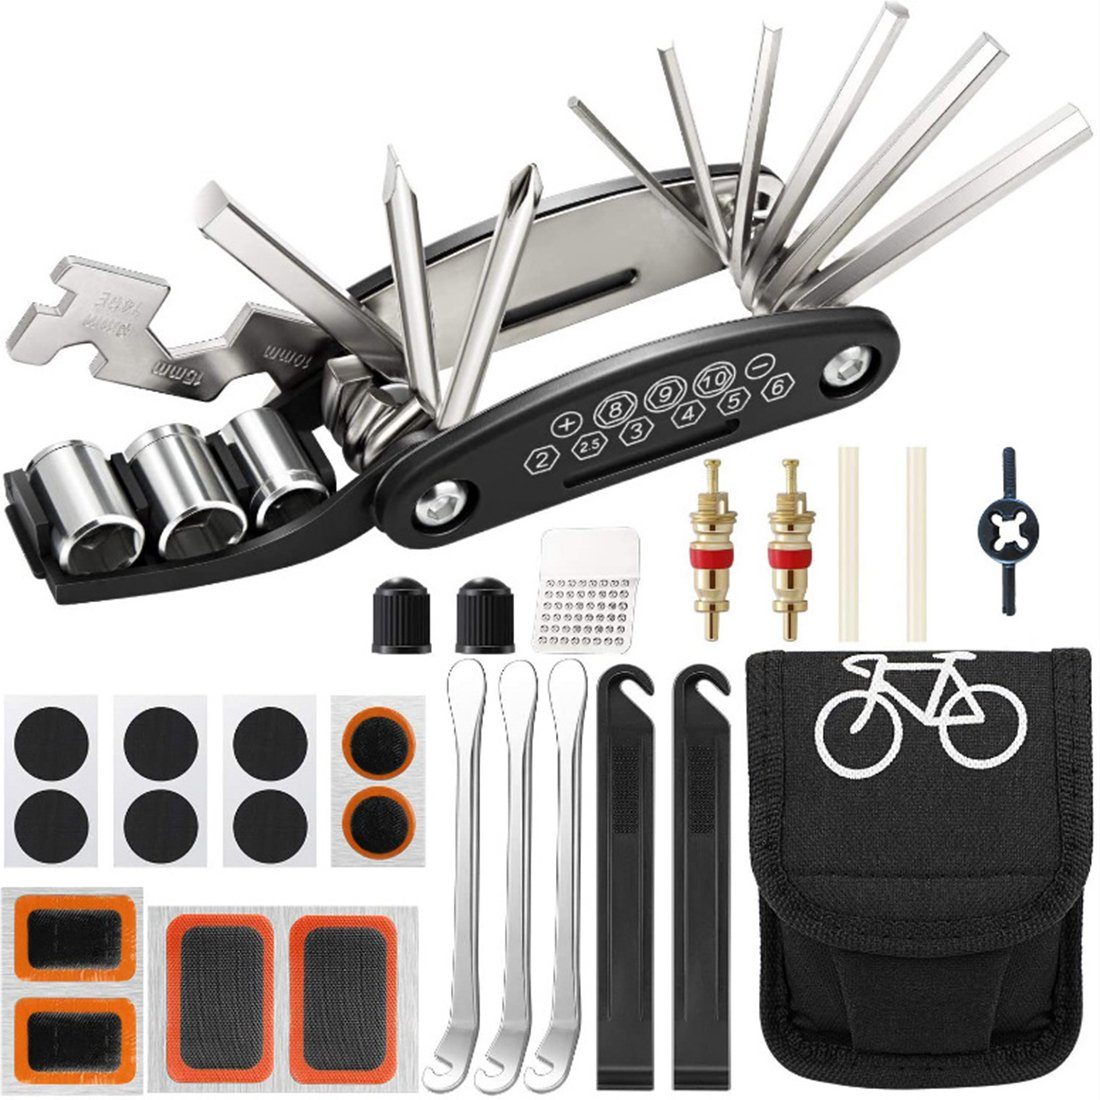 Haiaveng Fahrrad-Reparaturset Fahrrad-Multitool 16 in 1 Werkzeuge für  Fahrrad Reparatur, Fahrradflickzeug Reparaturset Multifunktionswerkzeug mit  Tasche | Fahrradreparatursets